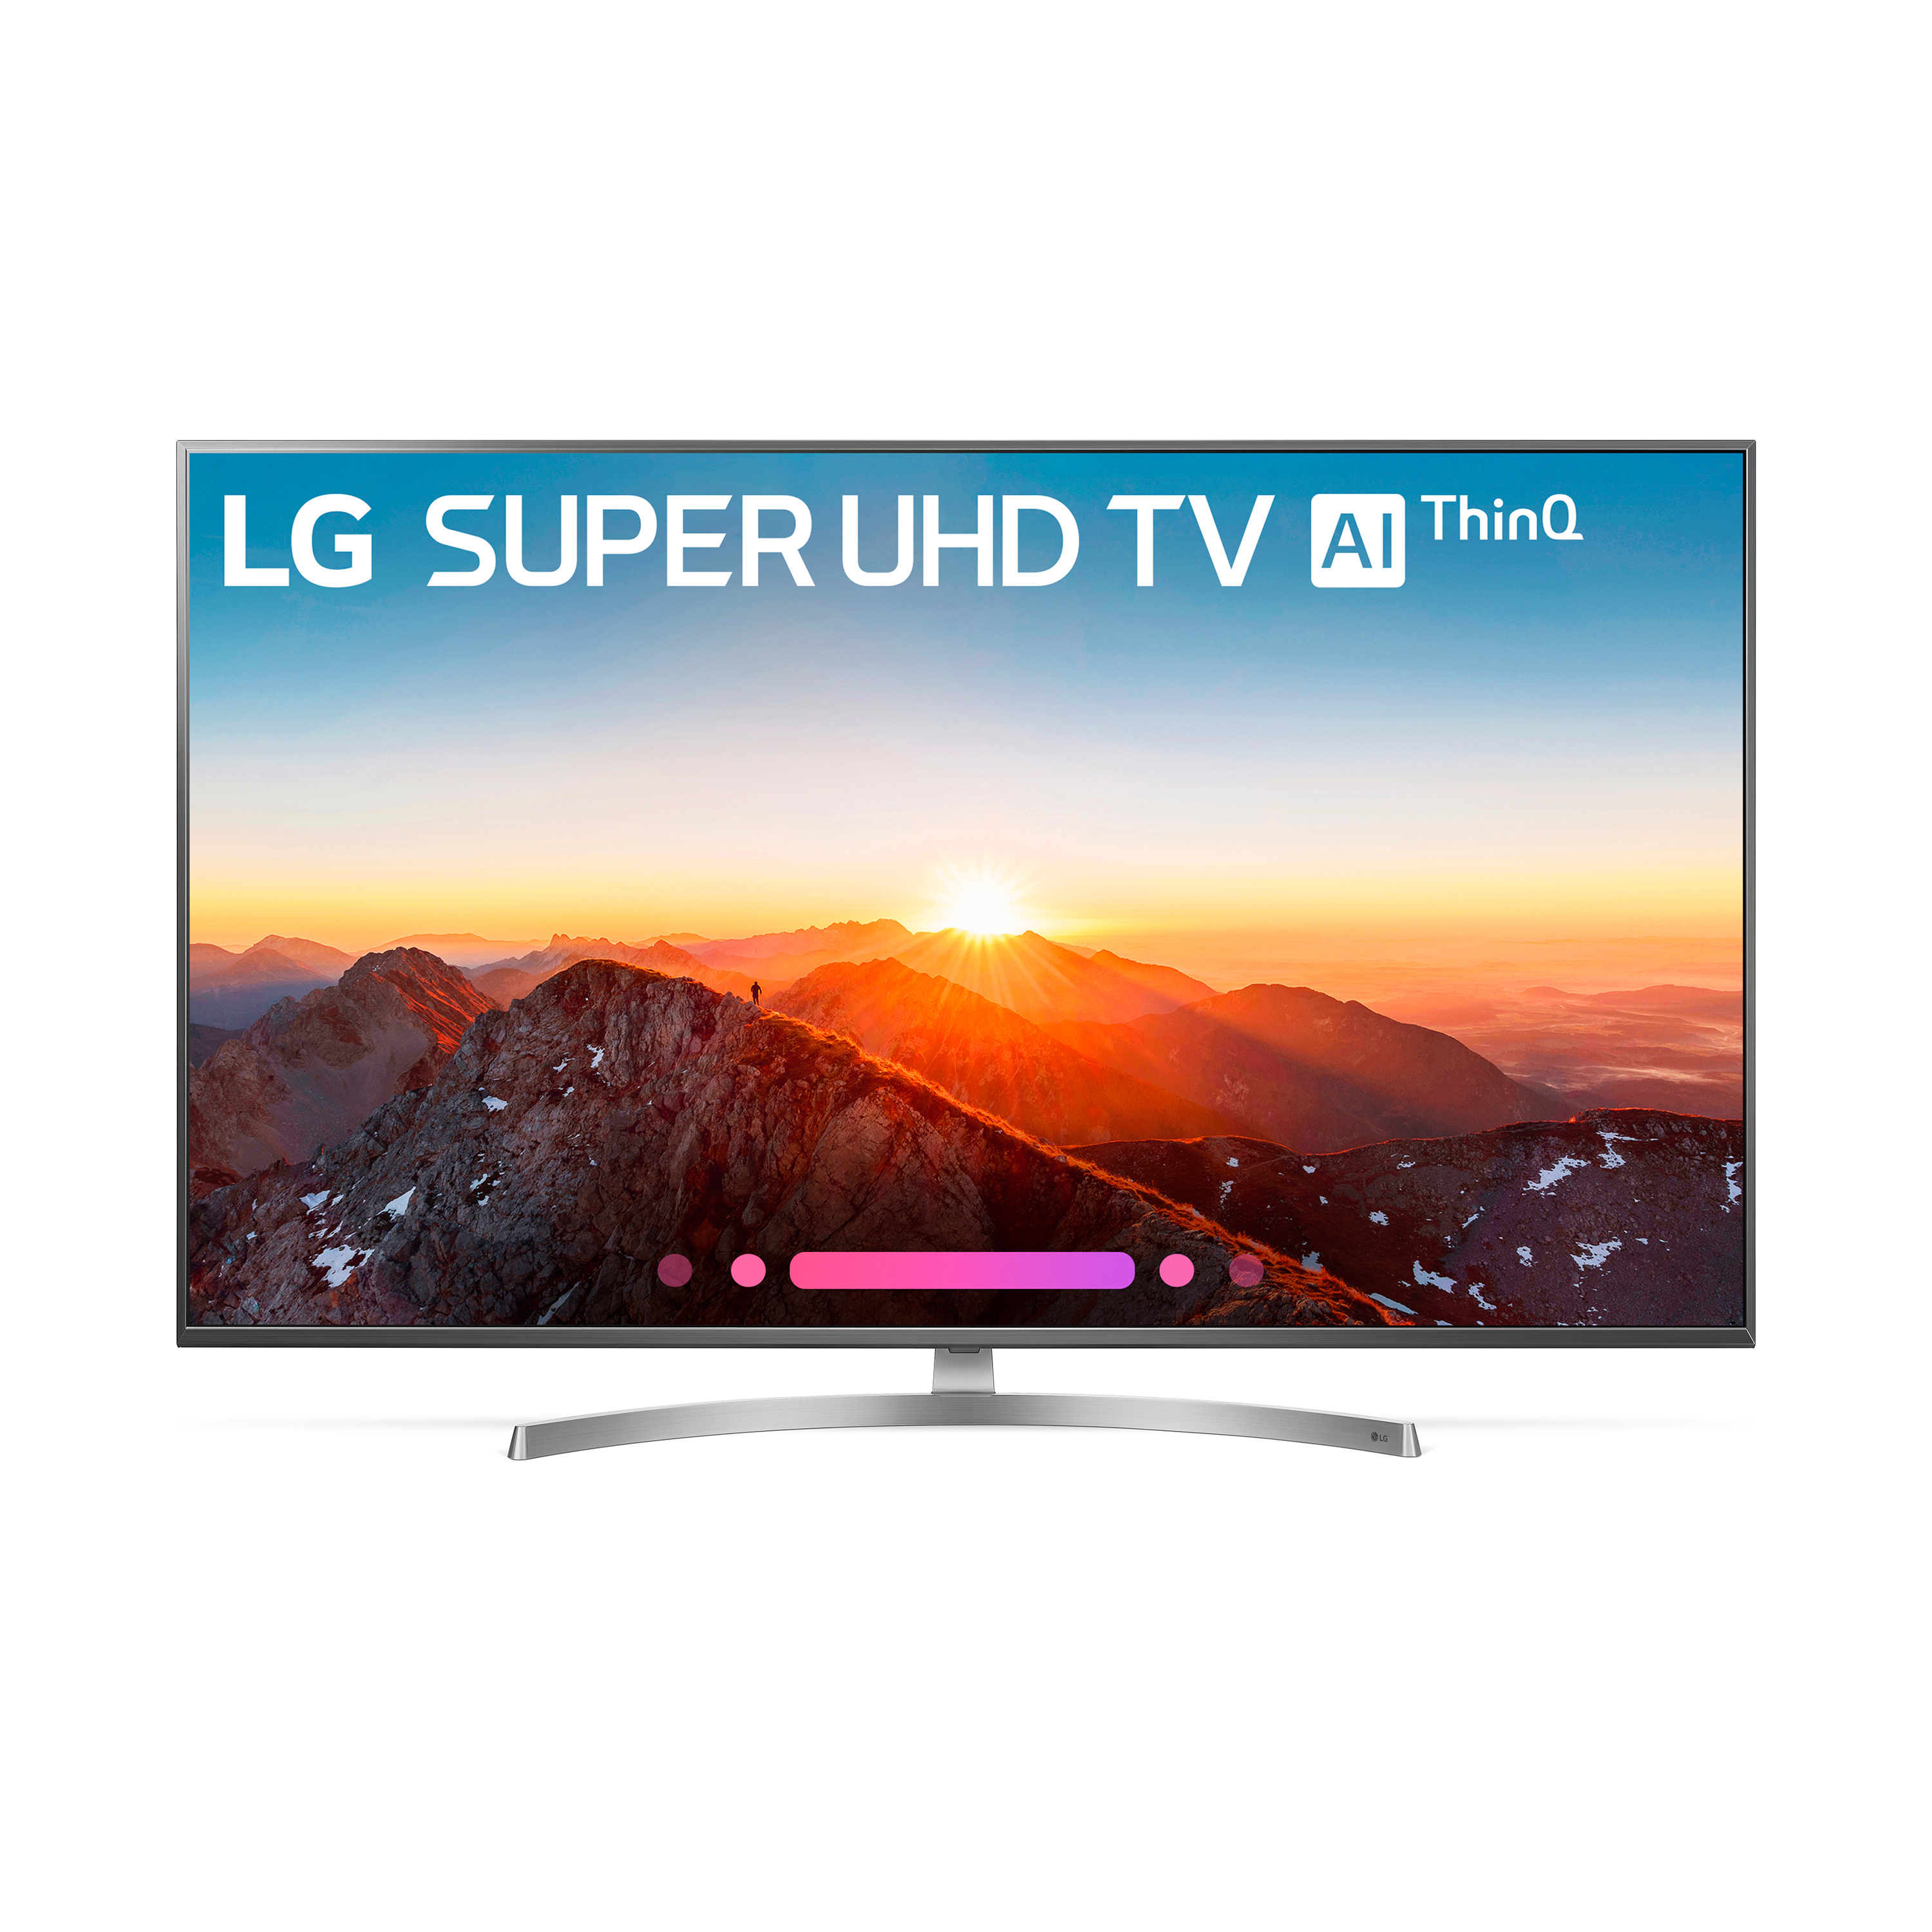 LG 65SK8000PUA 65″ 4K HDR Smart AI SUPER UHD TV with ThinQ